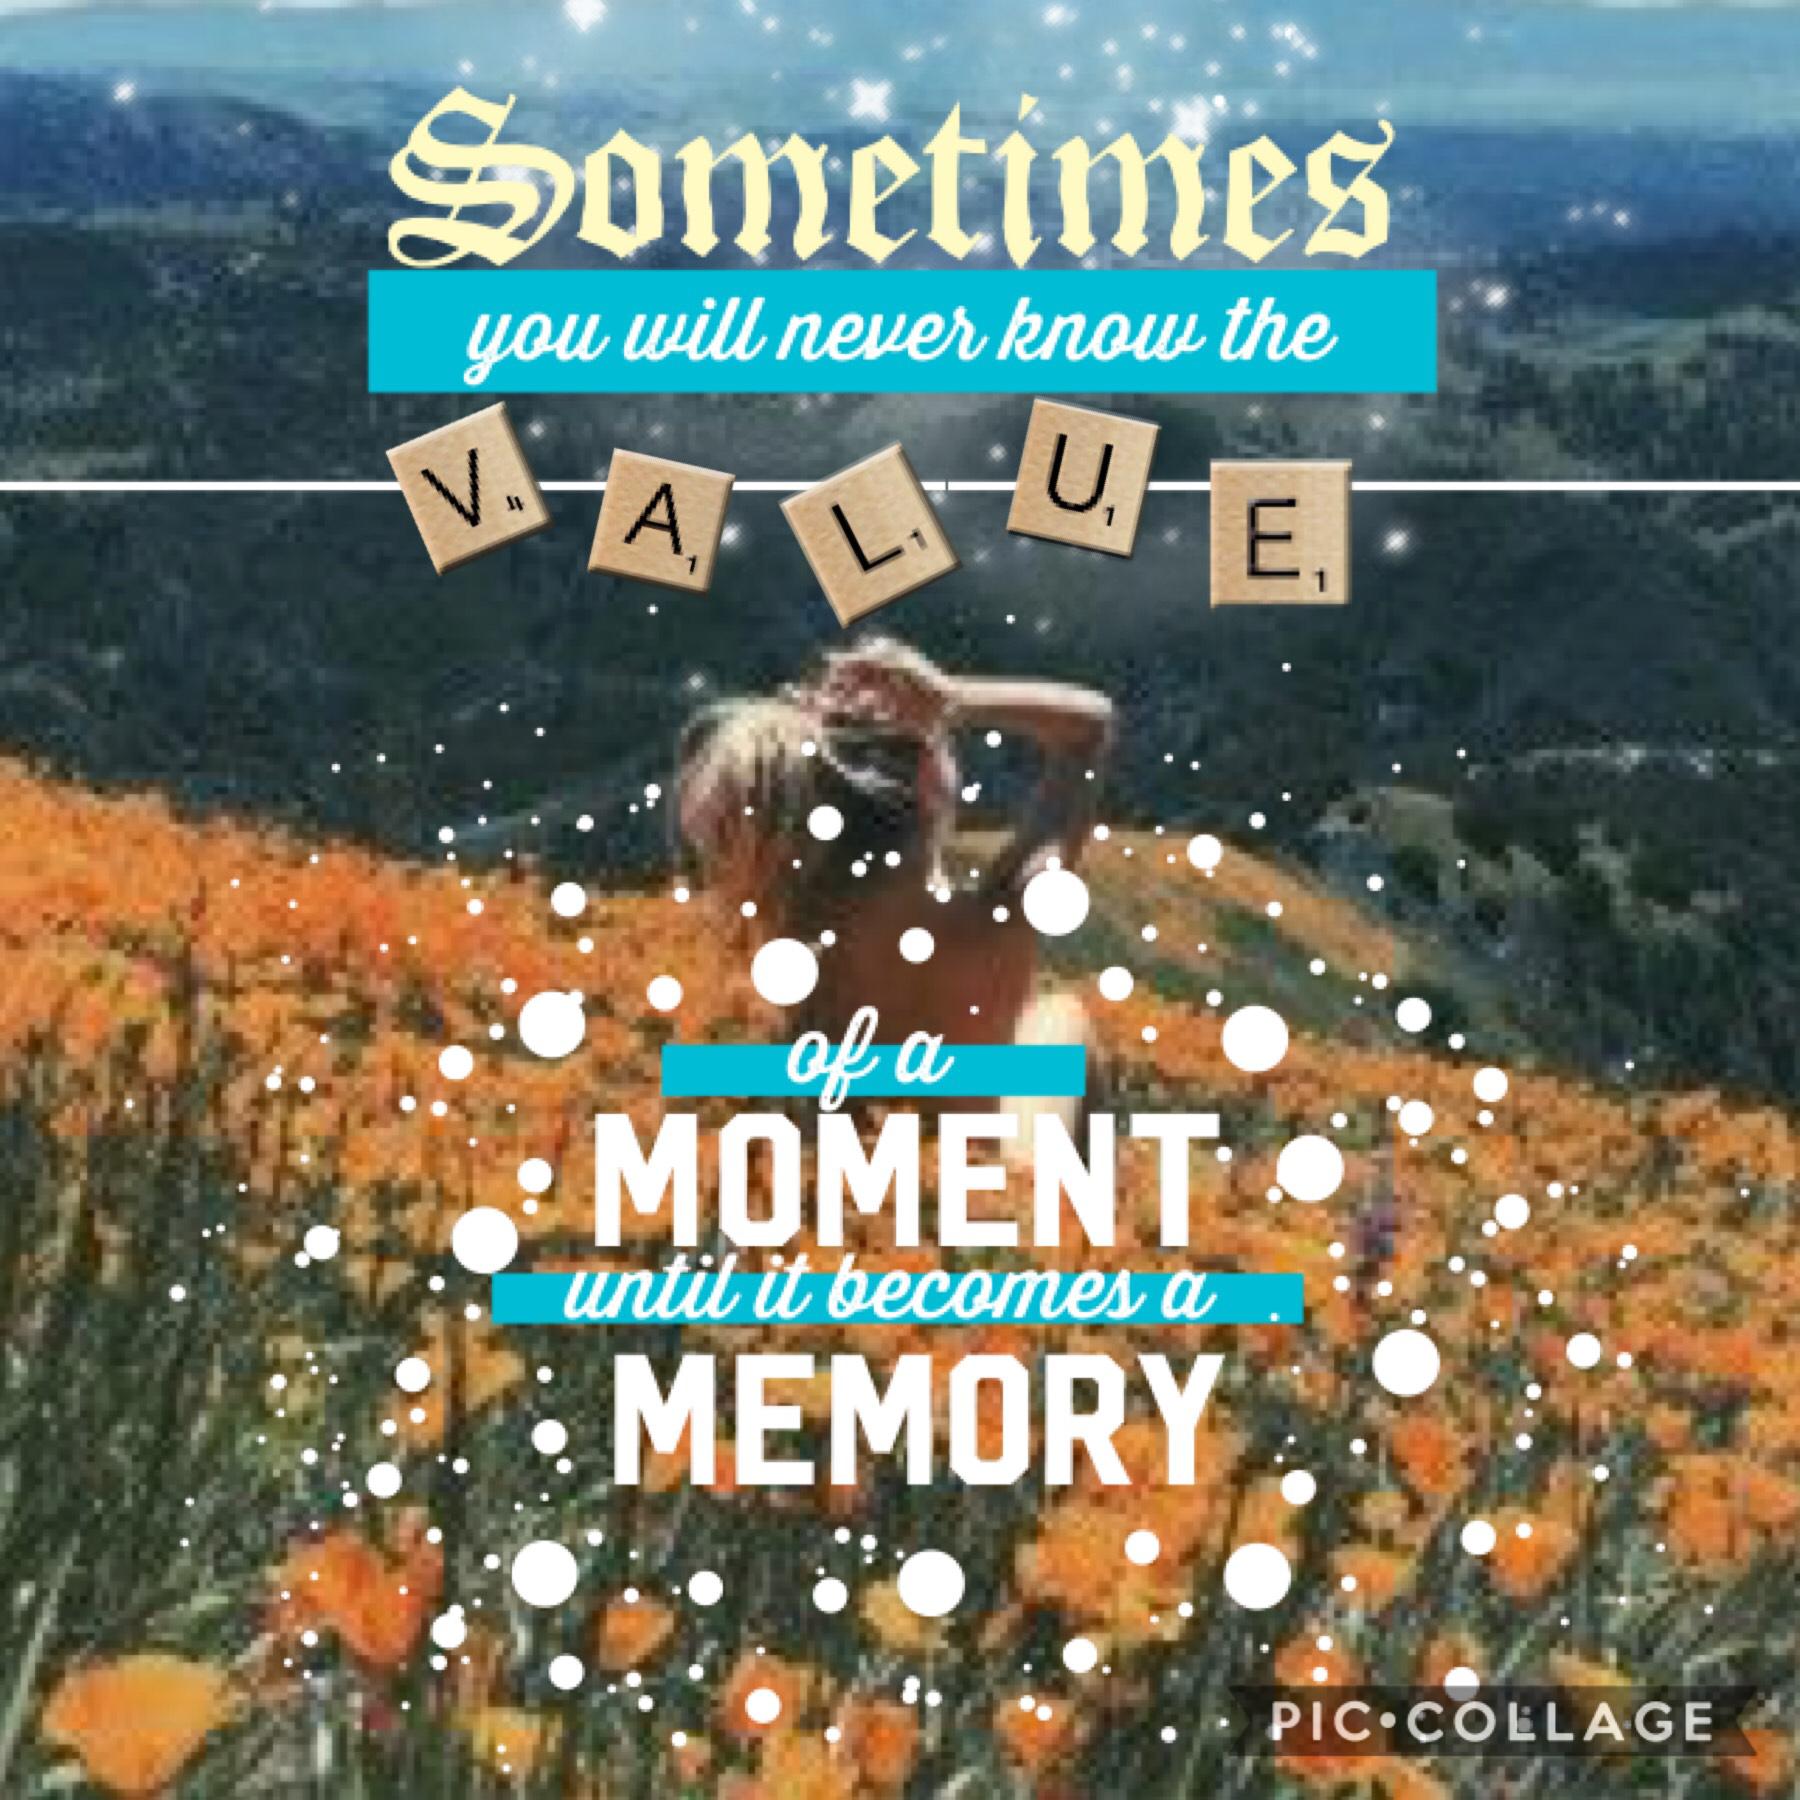 Treasure each moment worth holding onto